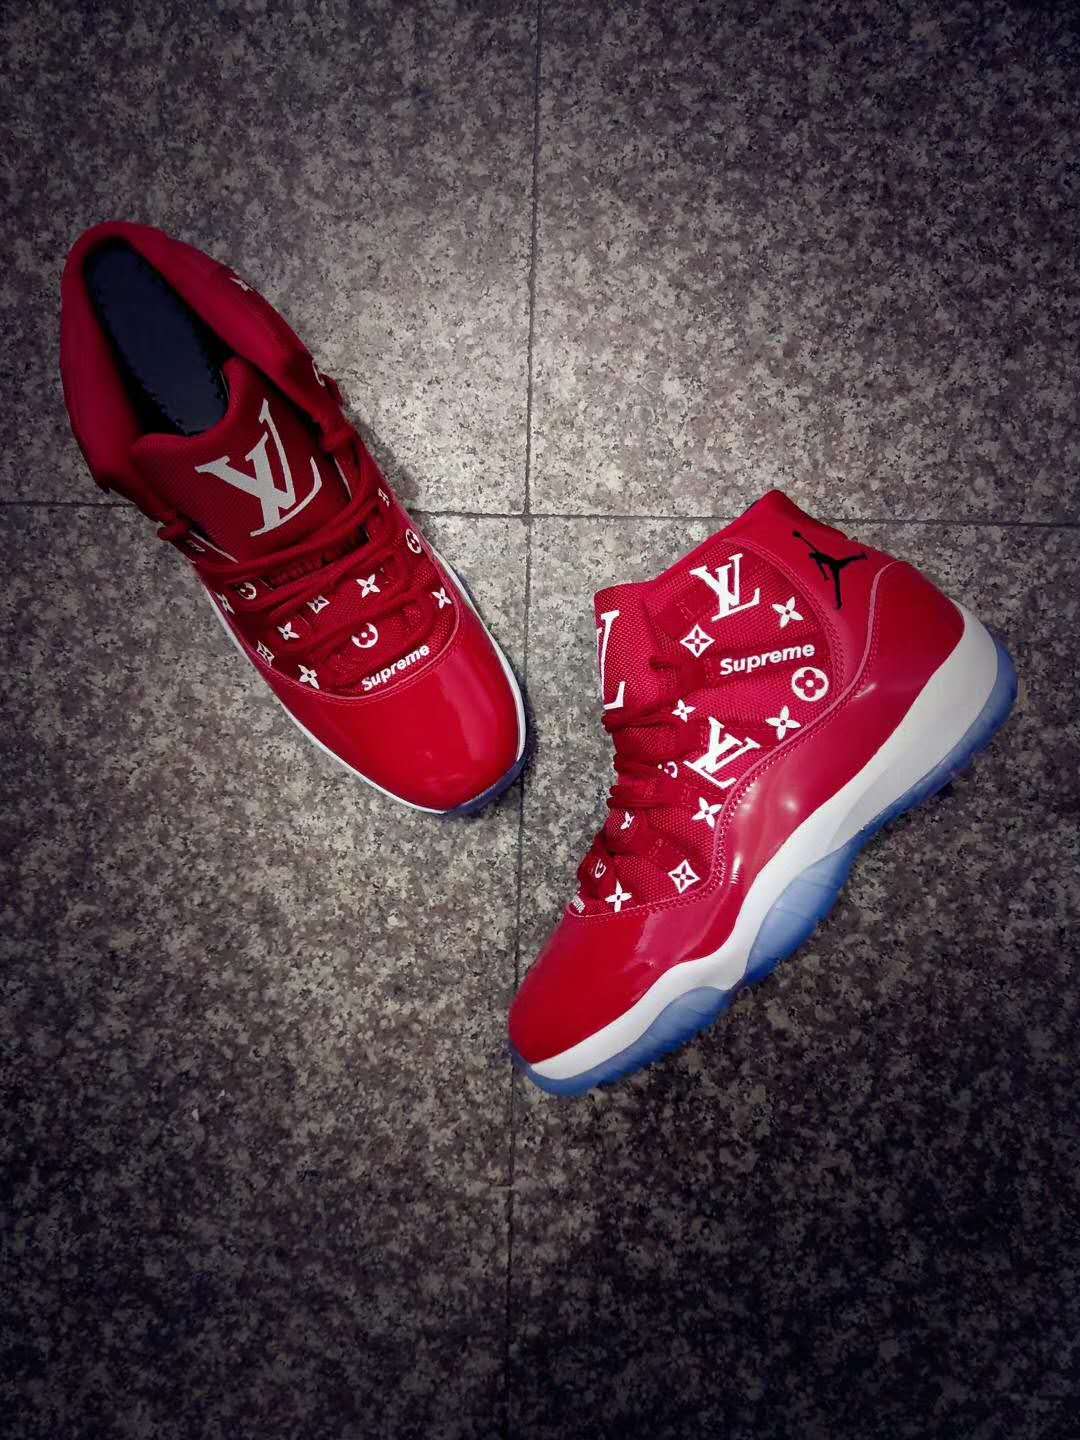 2018 Air Jordan 11 Retro Red Ice Sole Shoes